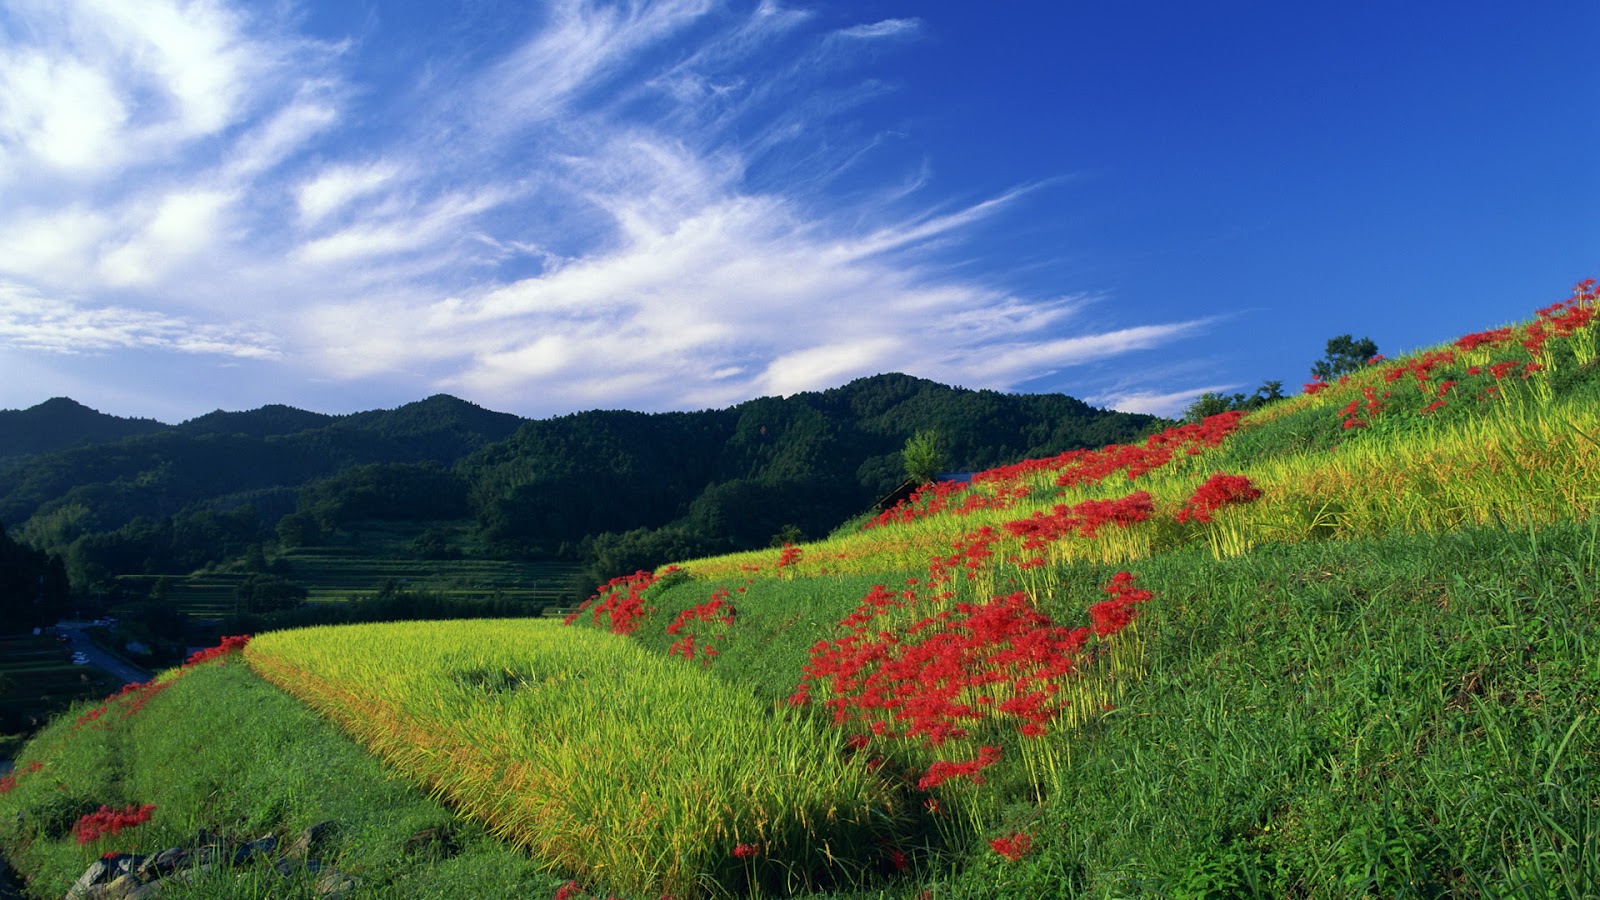 壁紙の素敵な写真,自然の風景,自然,草原,空,丘